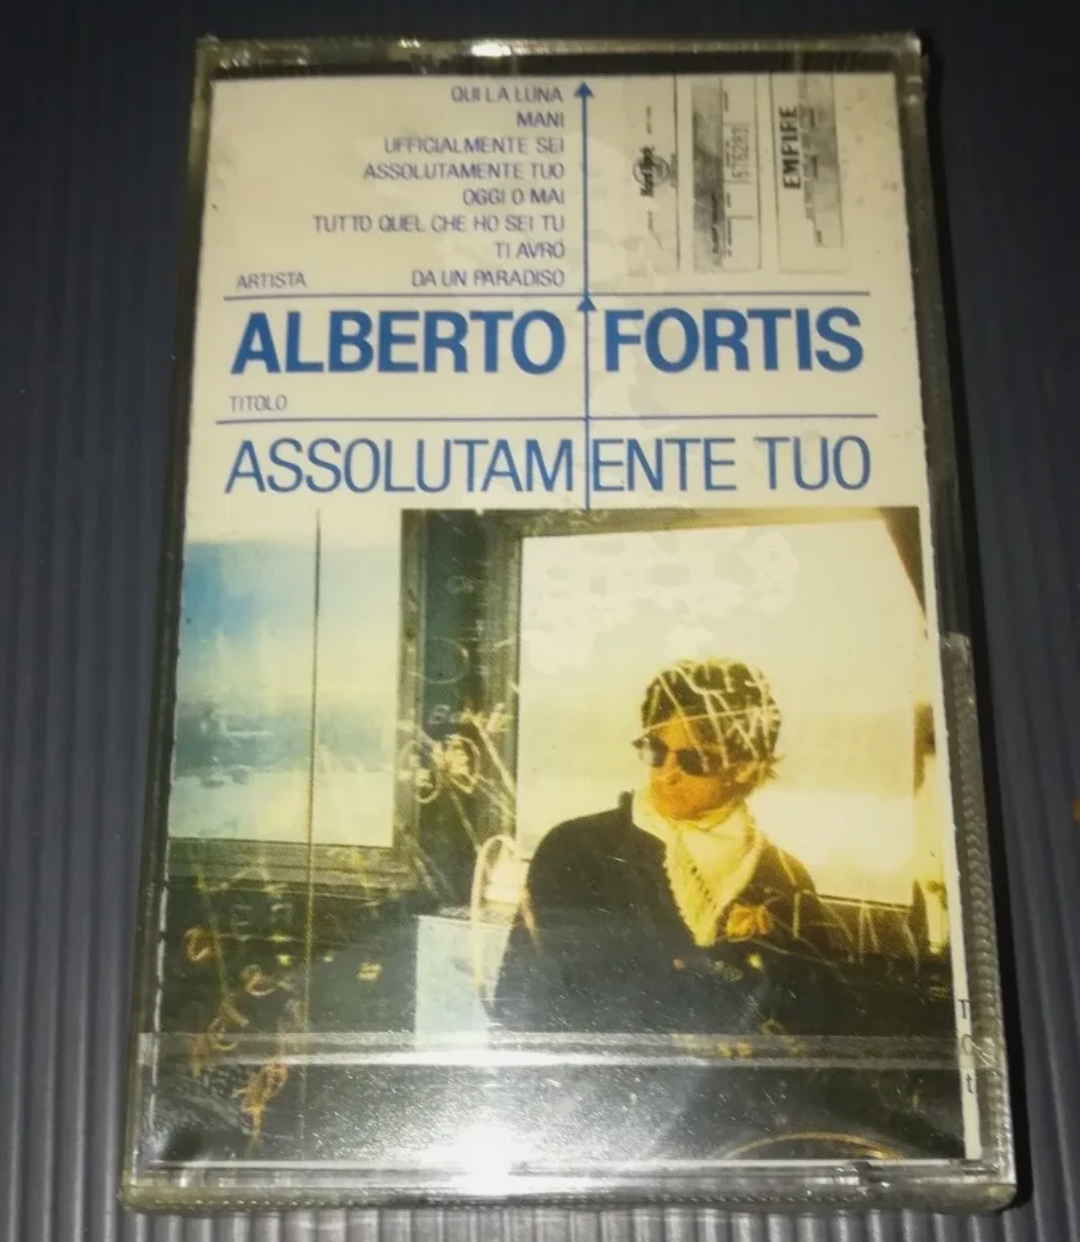 Assolutamente Tuo" Alberto Fortis Musicassetta